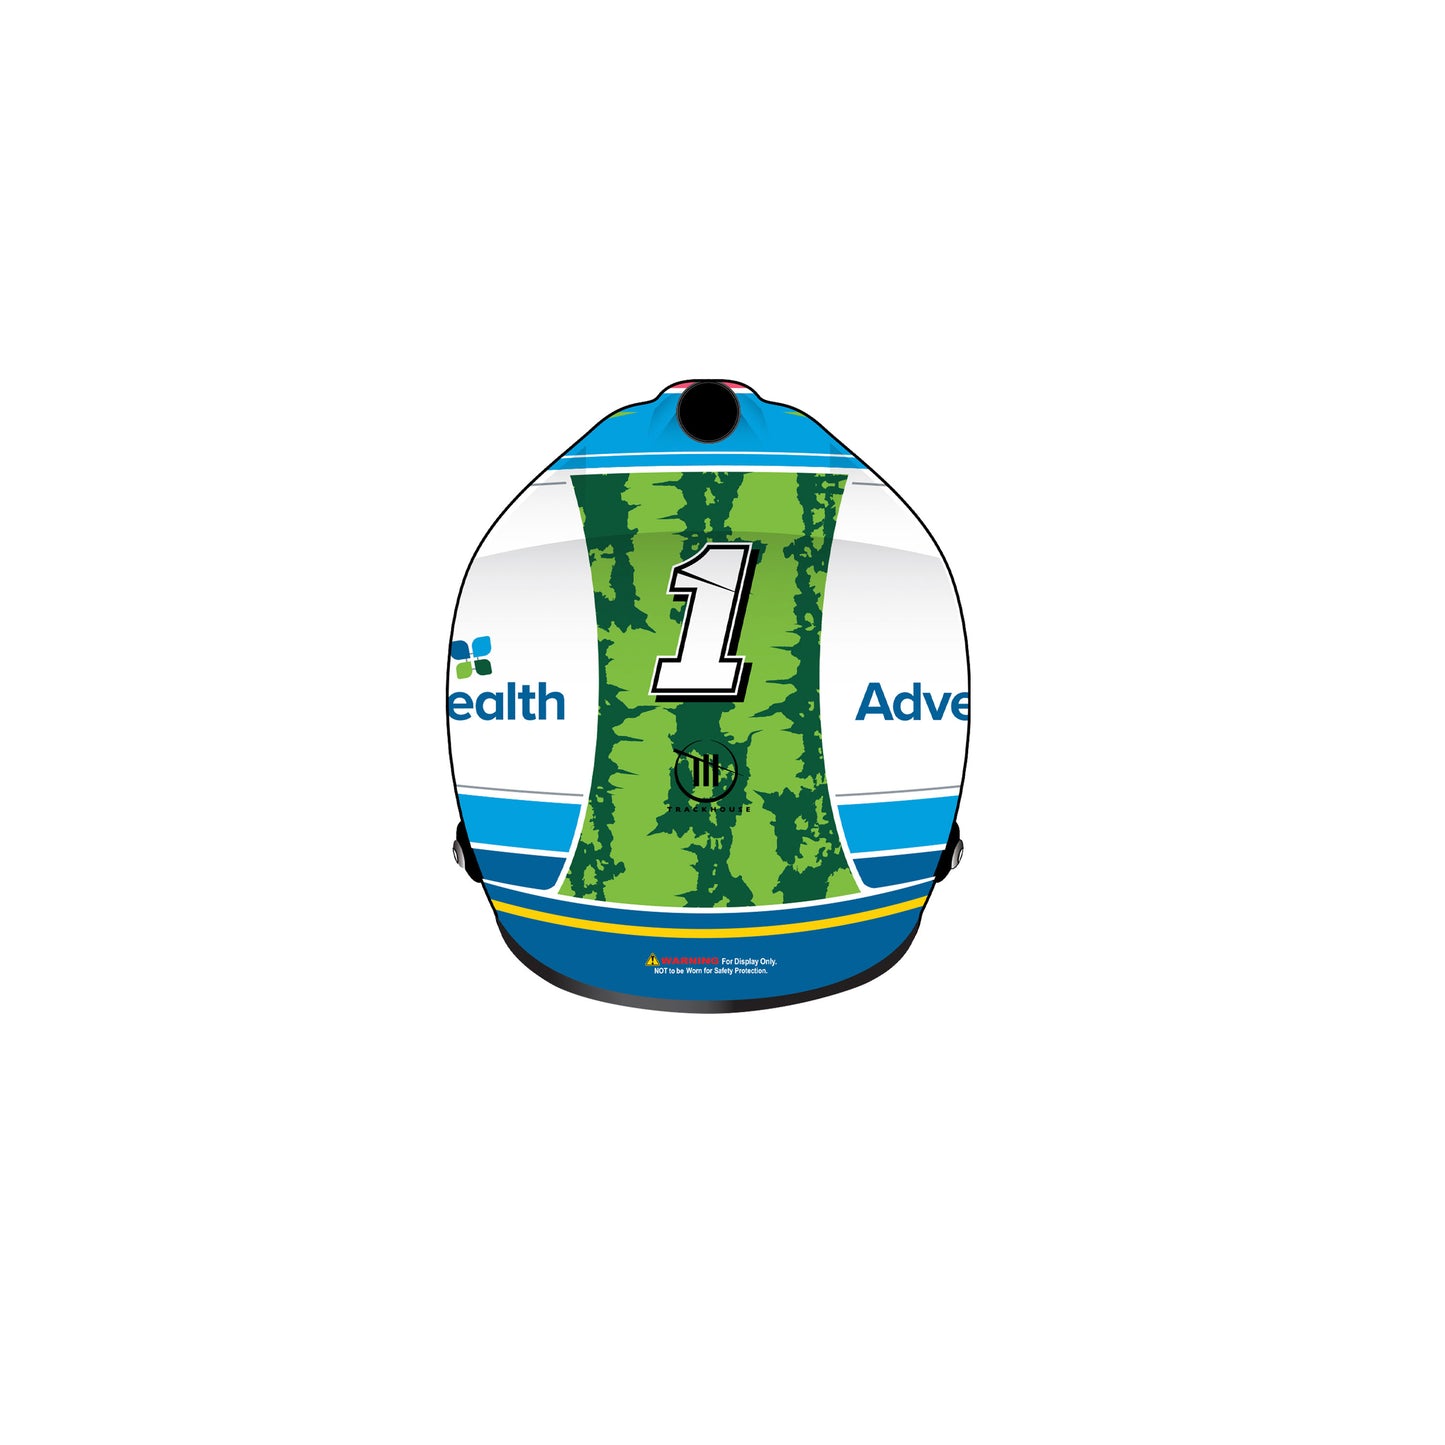 Ross Chastain Advent Health Mini Size Helmet